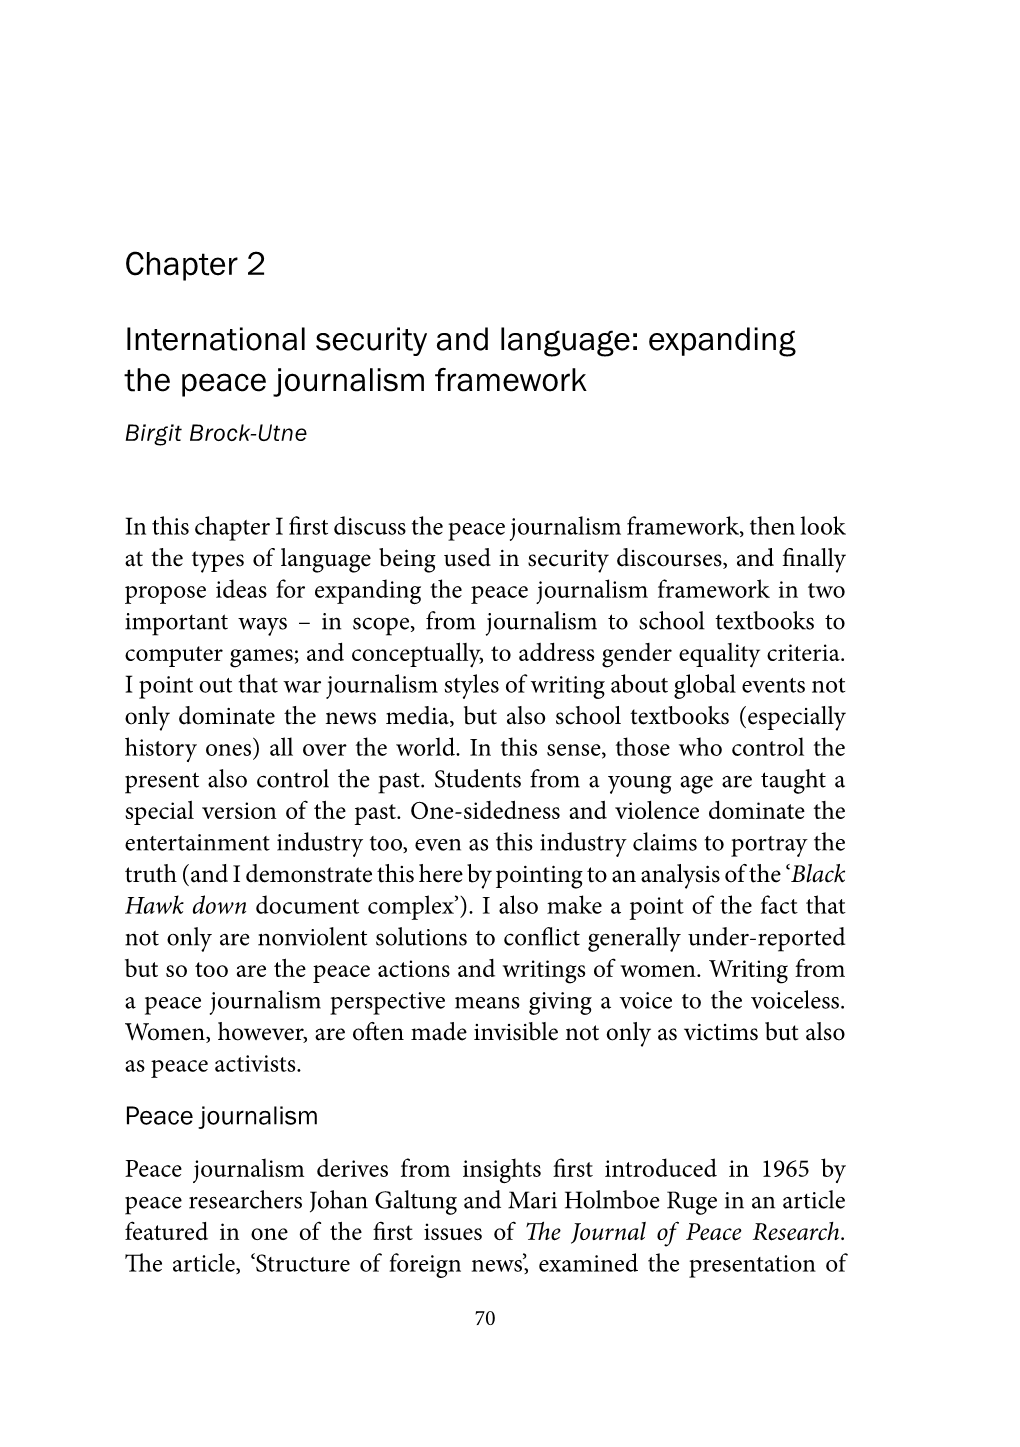 Expanding the Peace Journalism Framework Birgit Brock-Utne